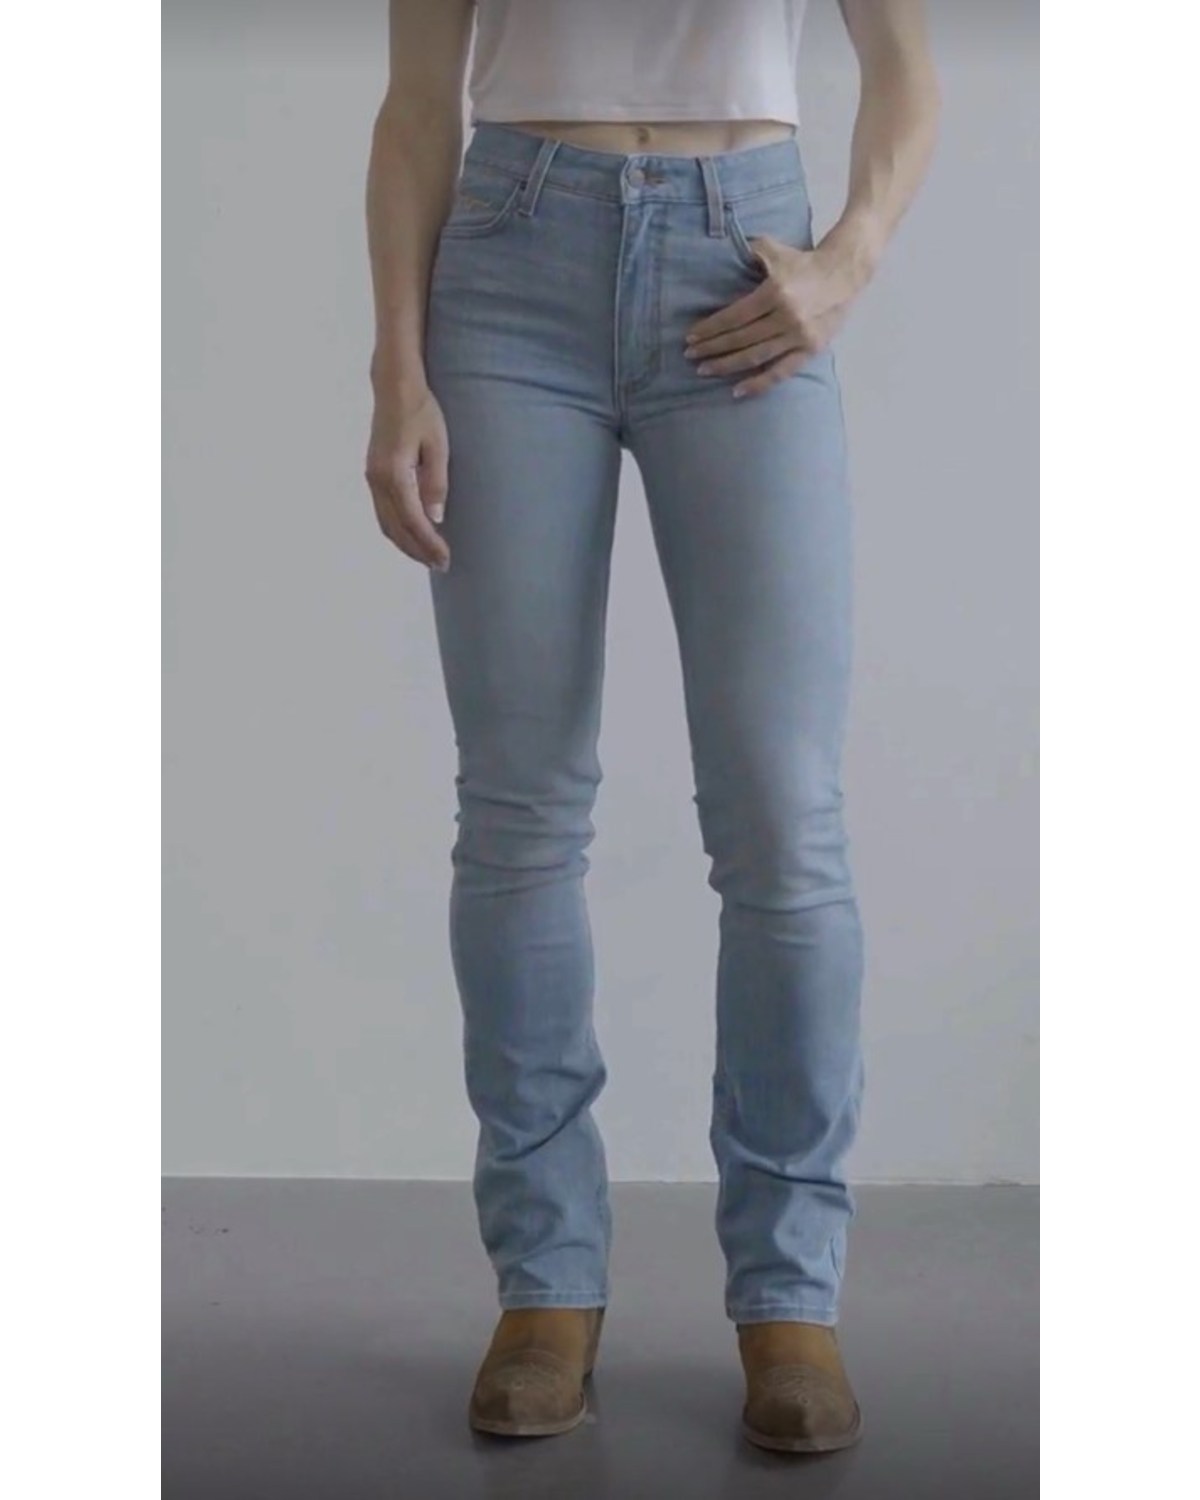 Kimes Ranch Women's Sarah Light Wash High Rise Slim Bootcut Jeans